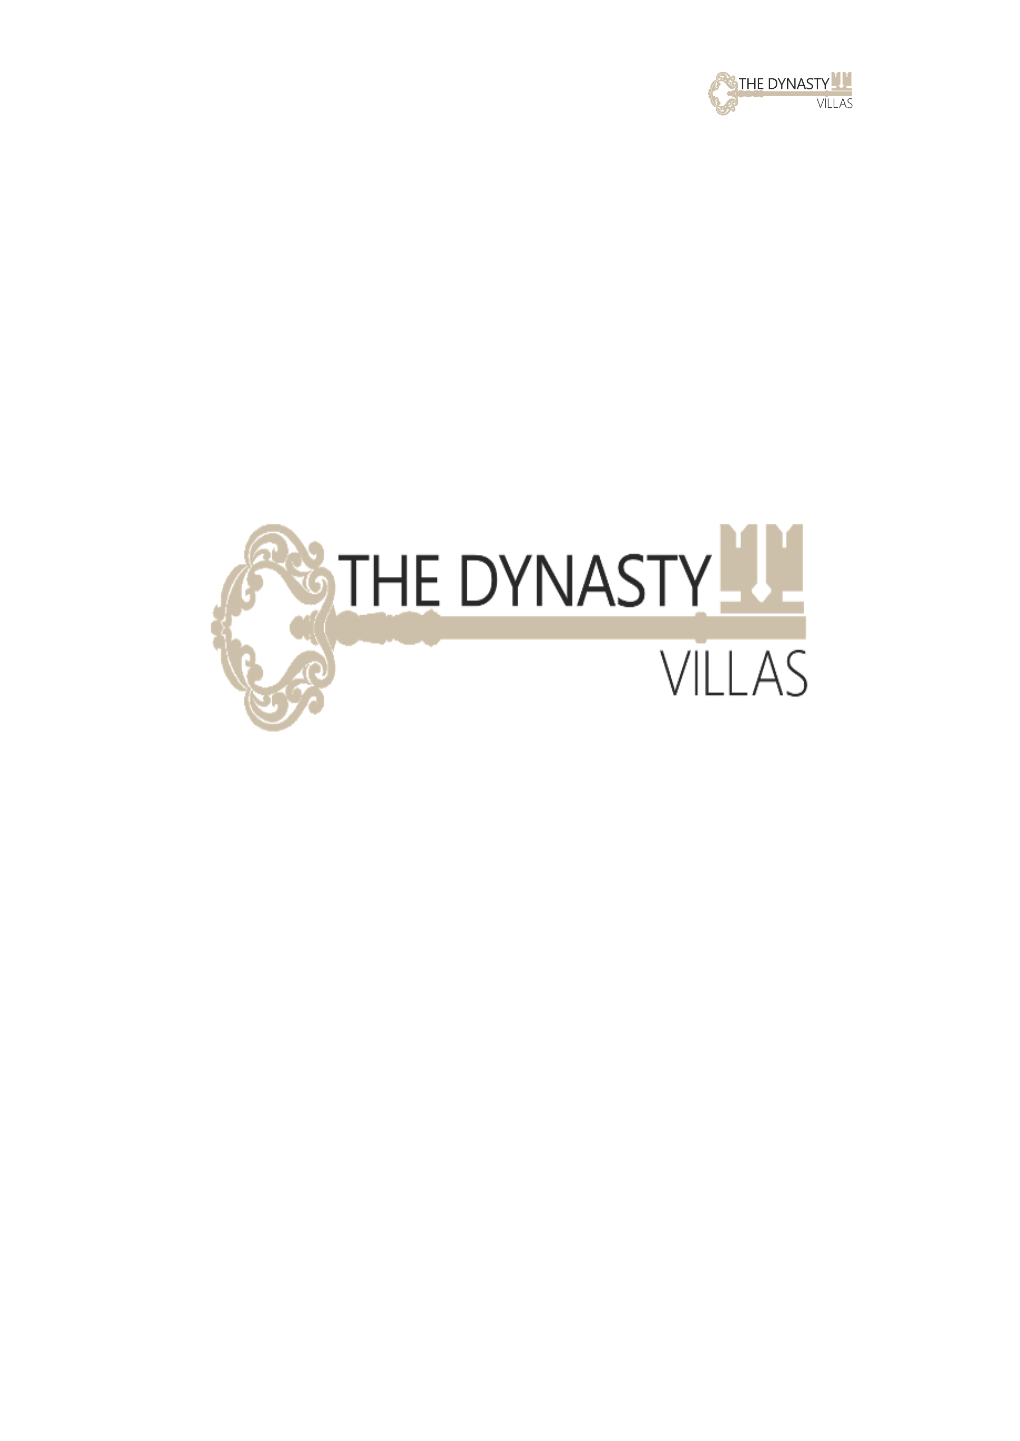 The Dynasty Villas